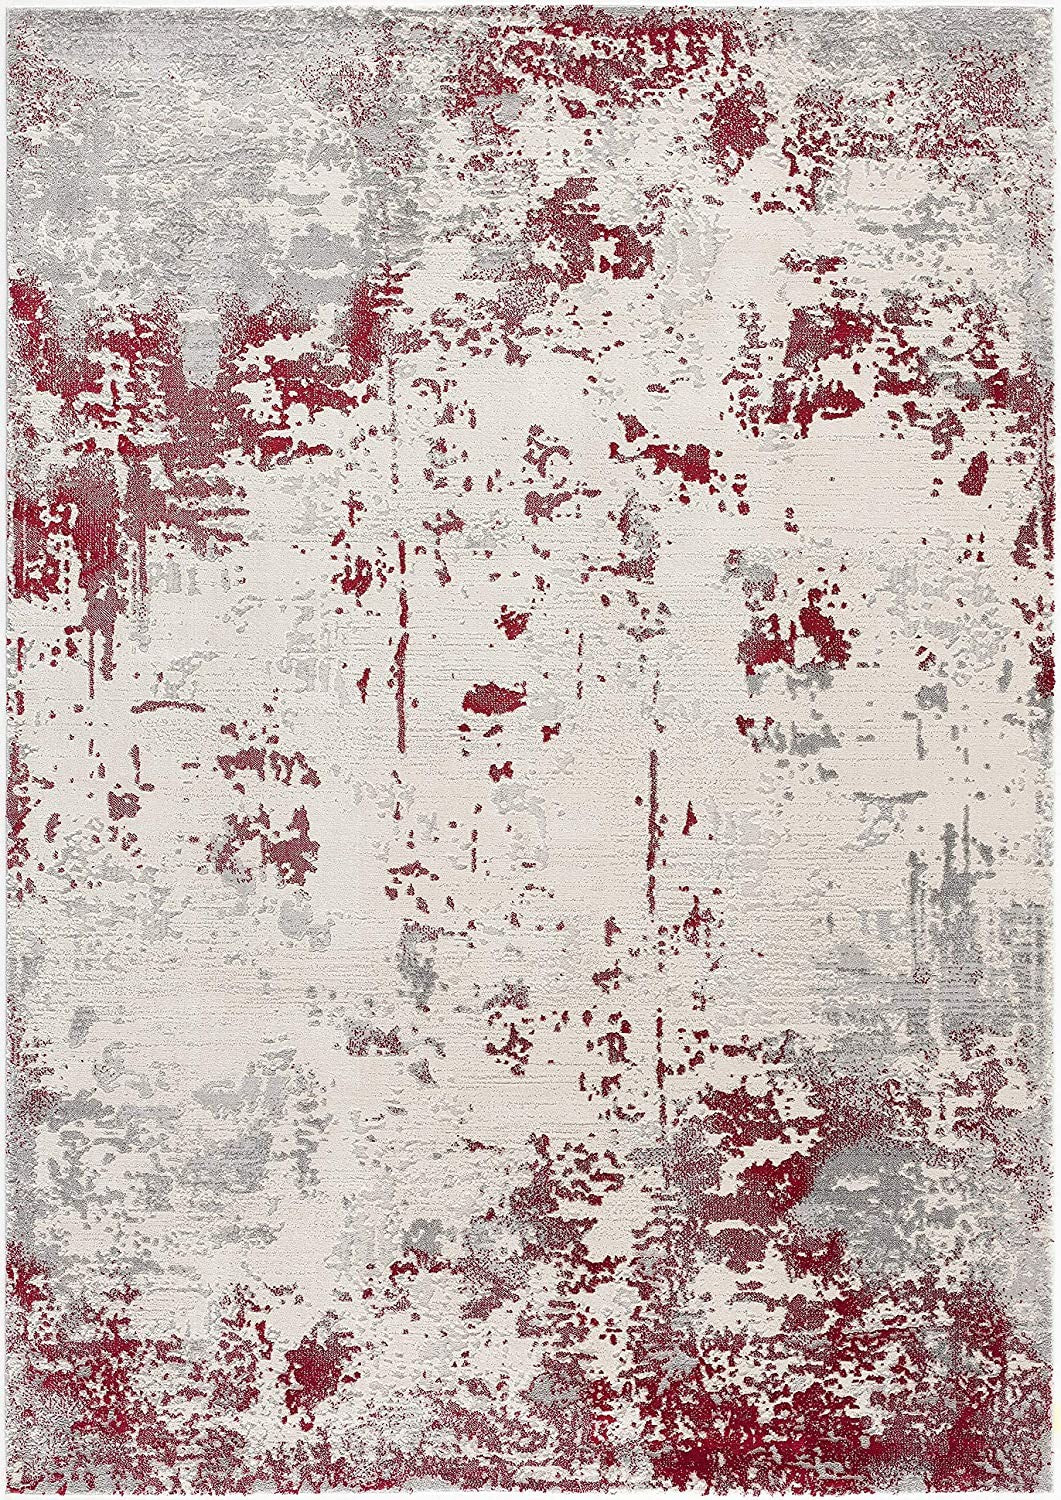 Red & Gray Modern Abstract Floor Mat Decorative Area Rug, 5 x 8 Feet